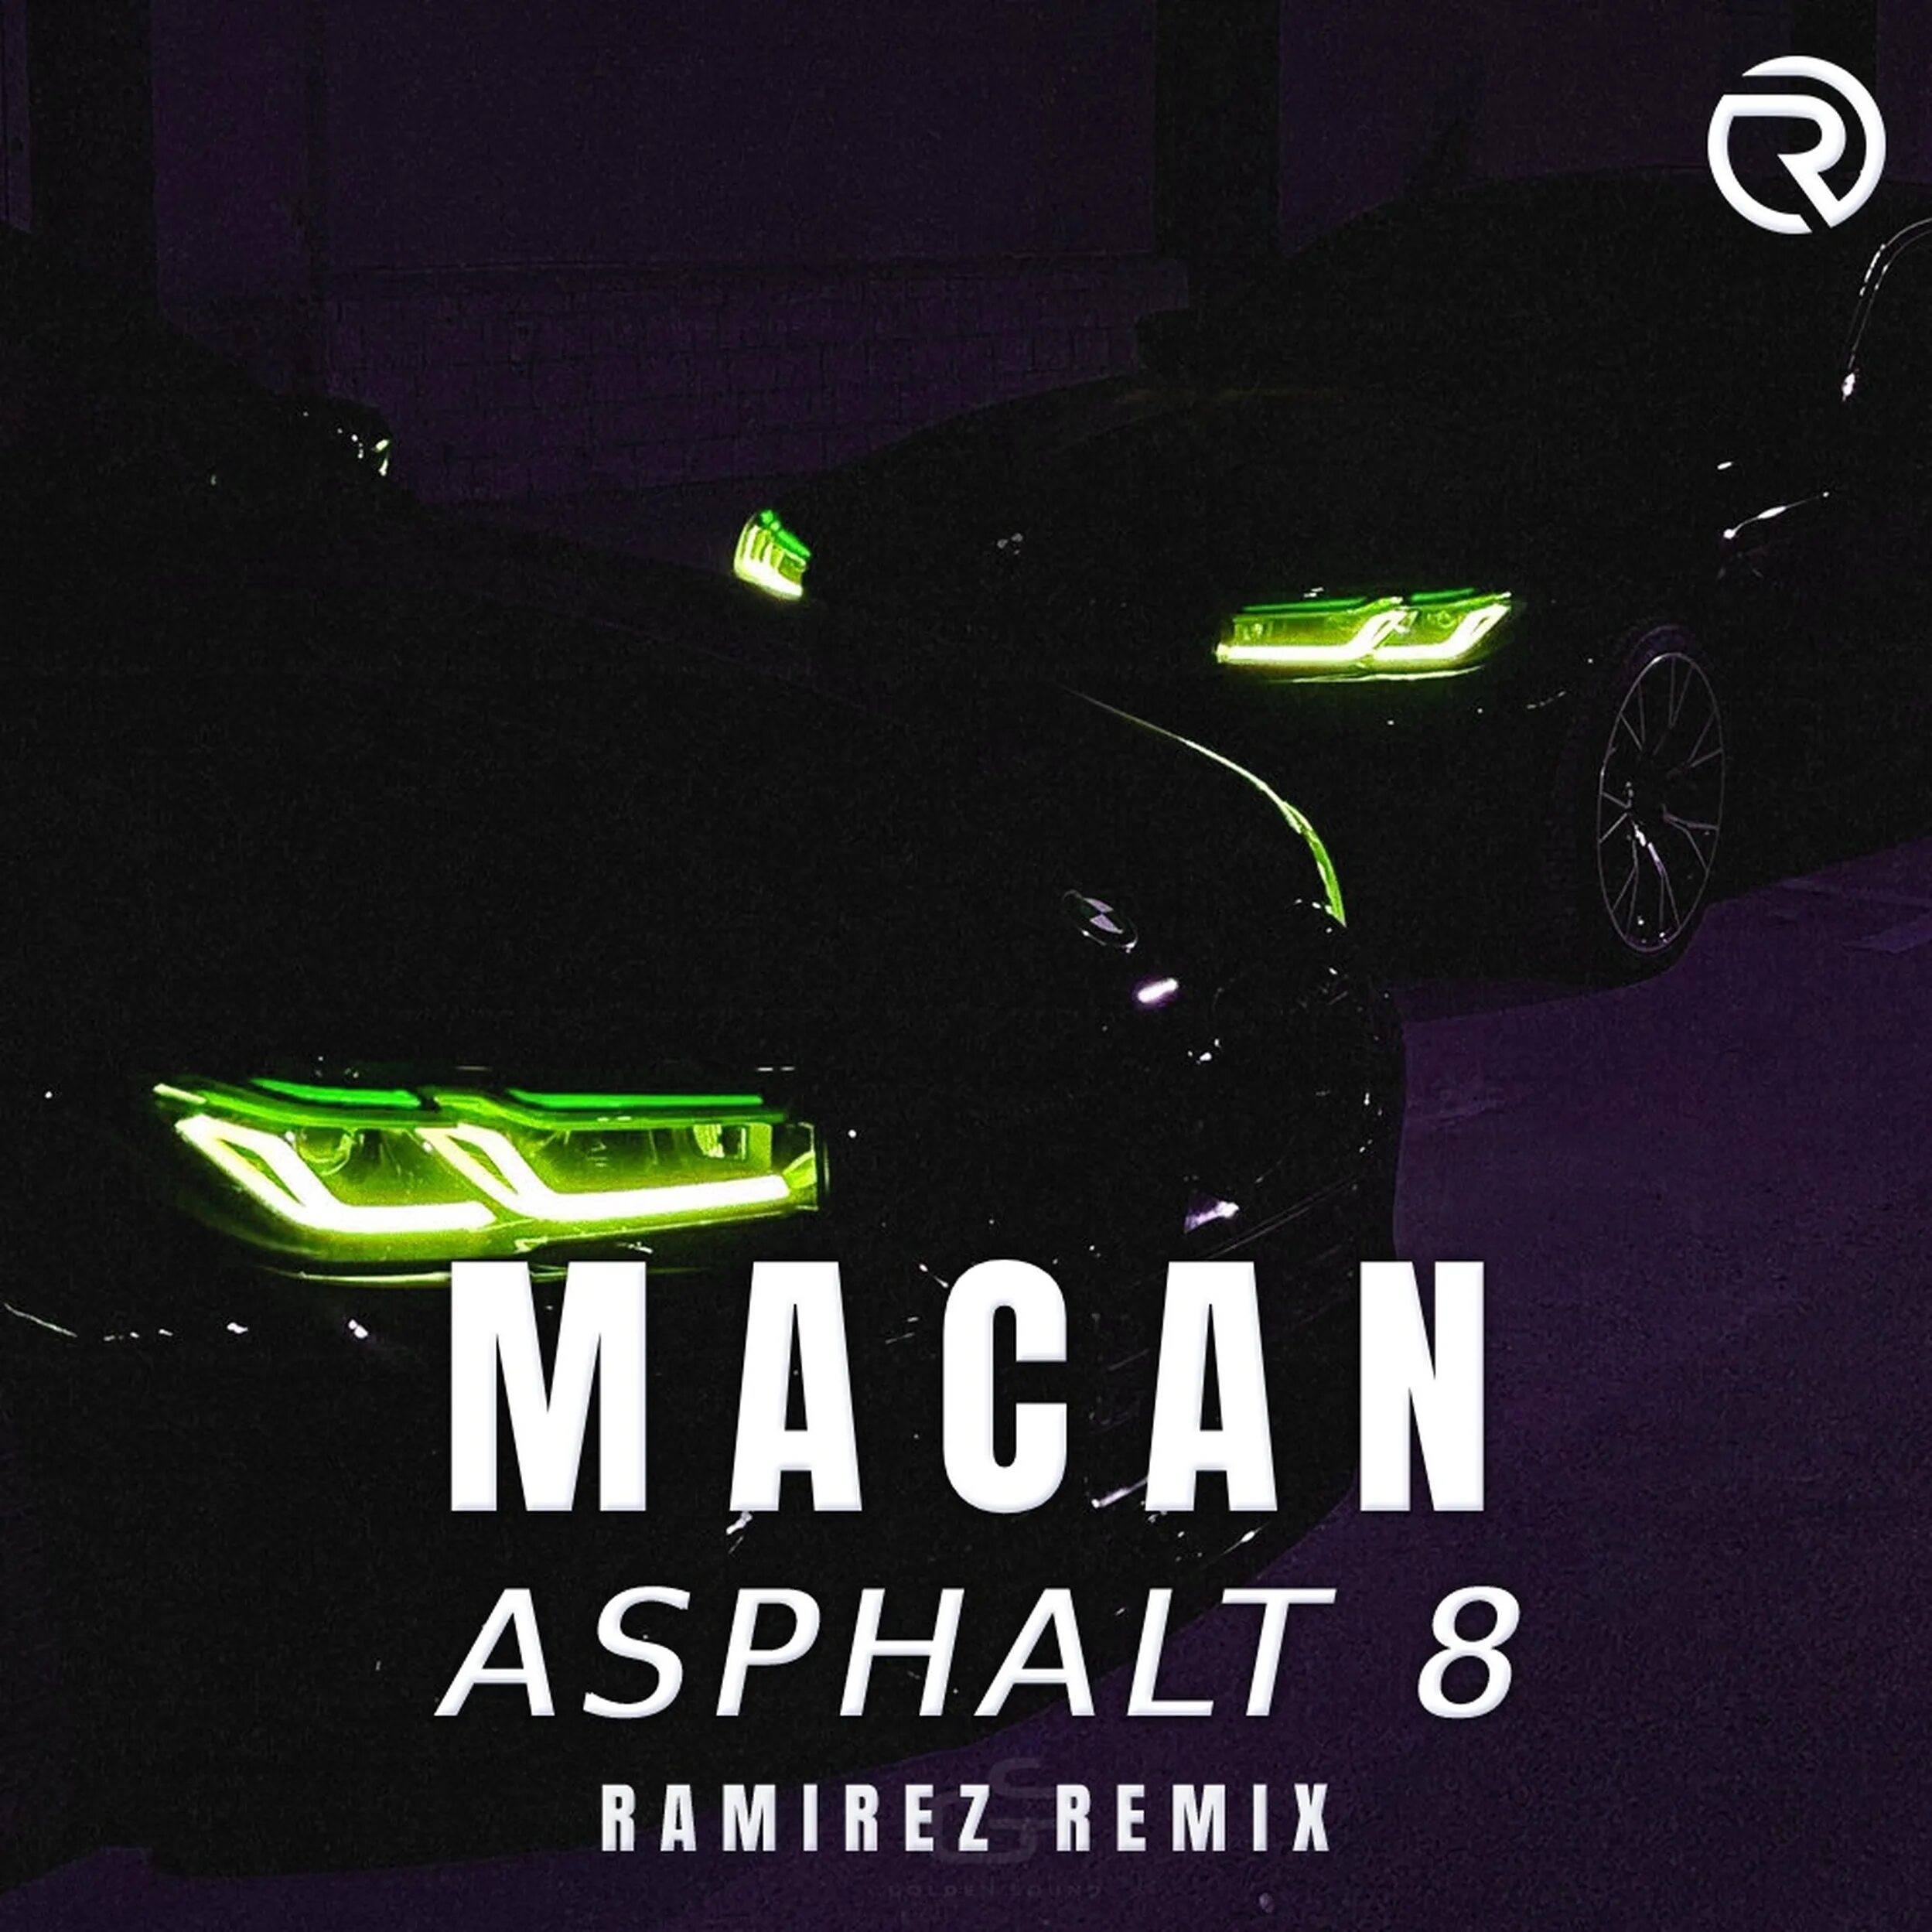 Macan asphalt 8 remix